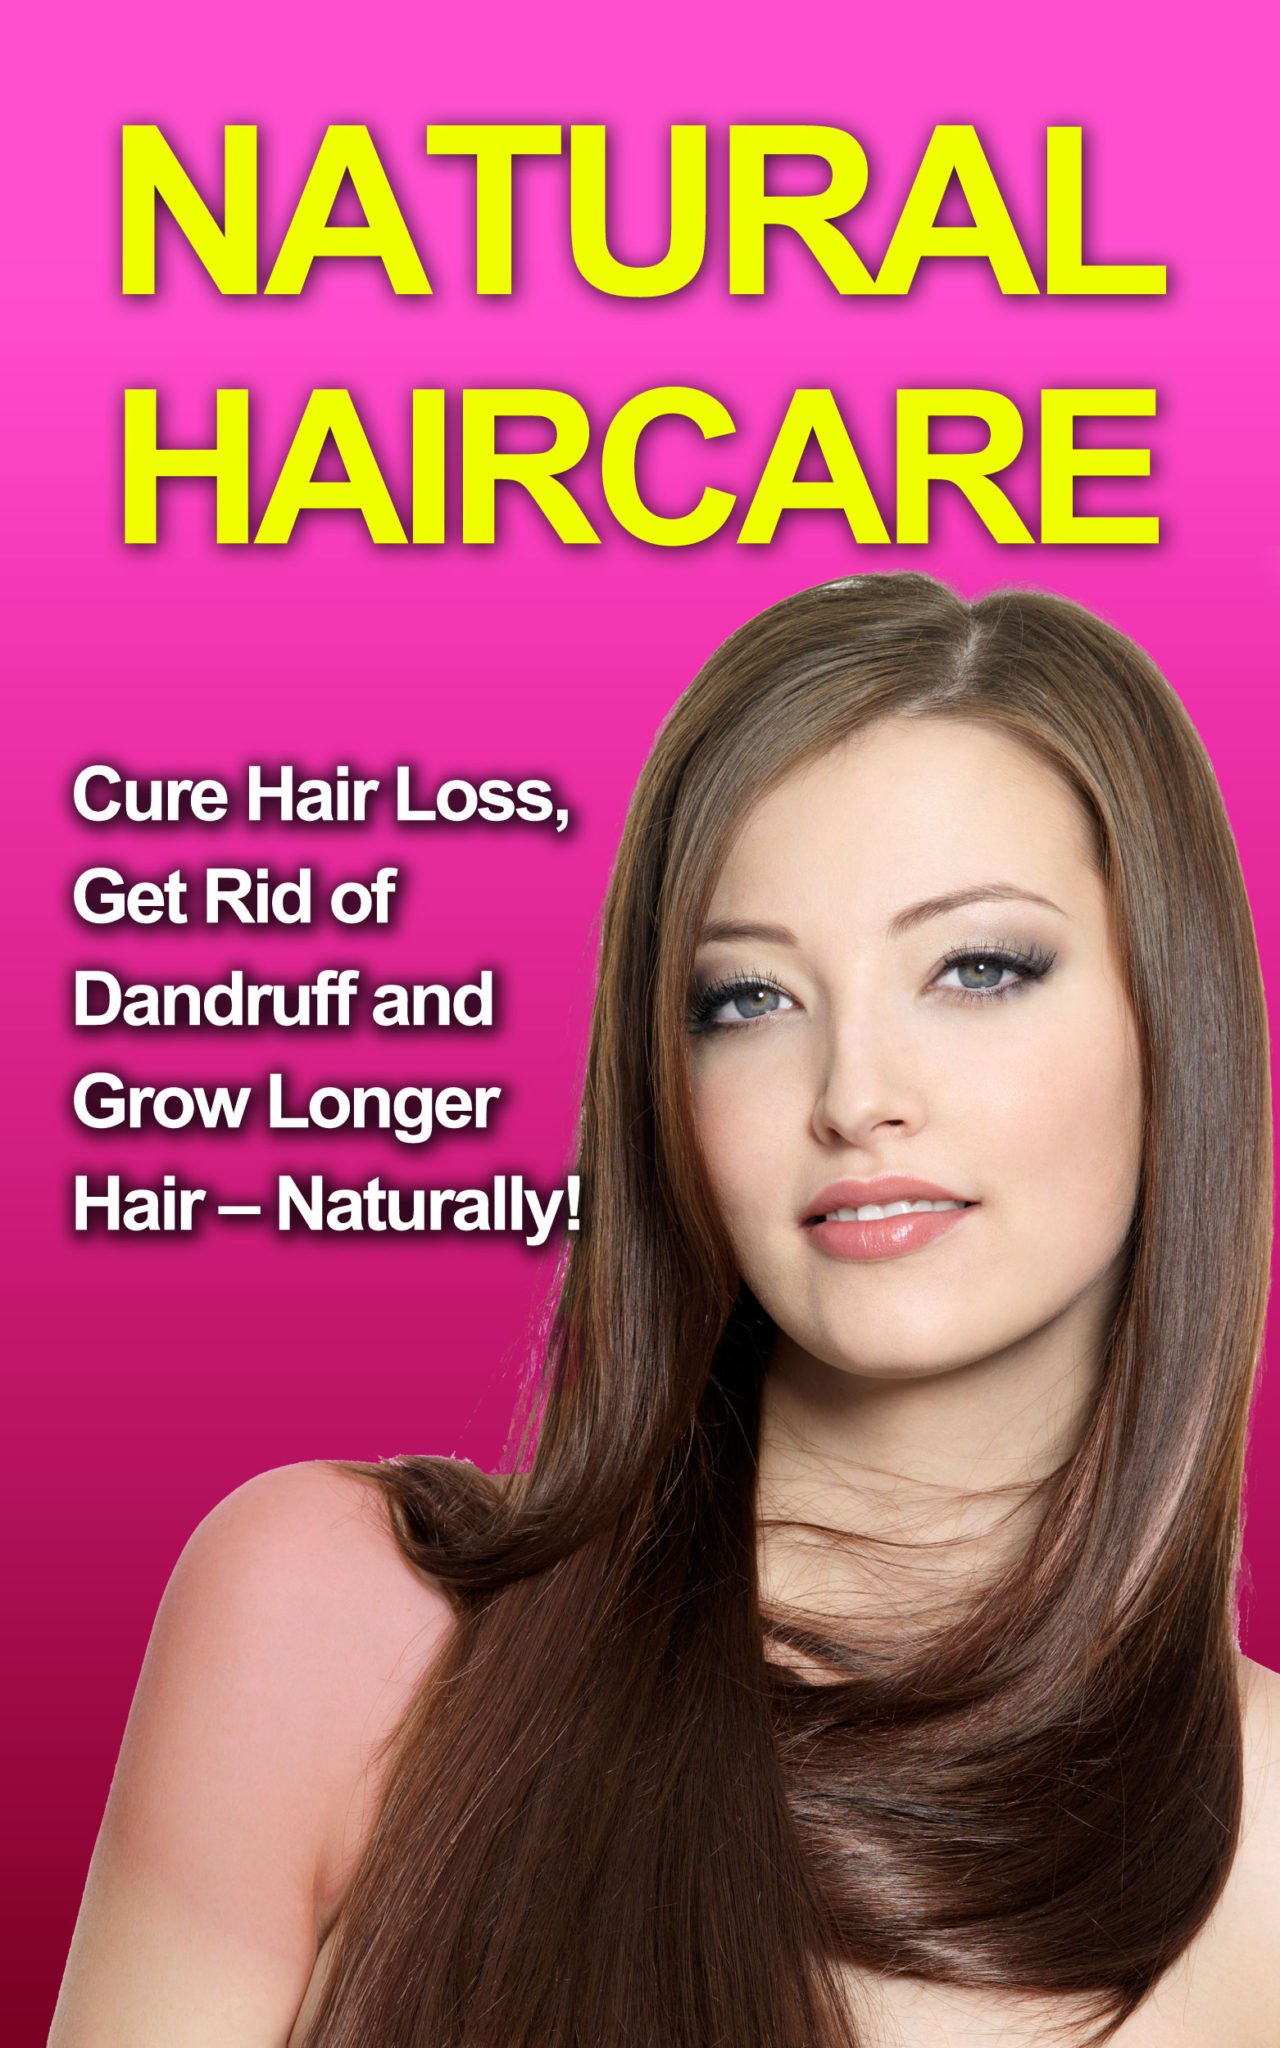 Natural Haircare: Cure Hair Loss, Get Rid Of Dandruff And Grow Longer Hair – Naturally! by Becky Marks